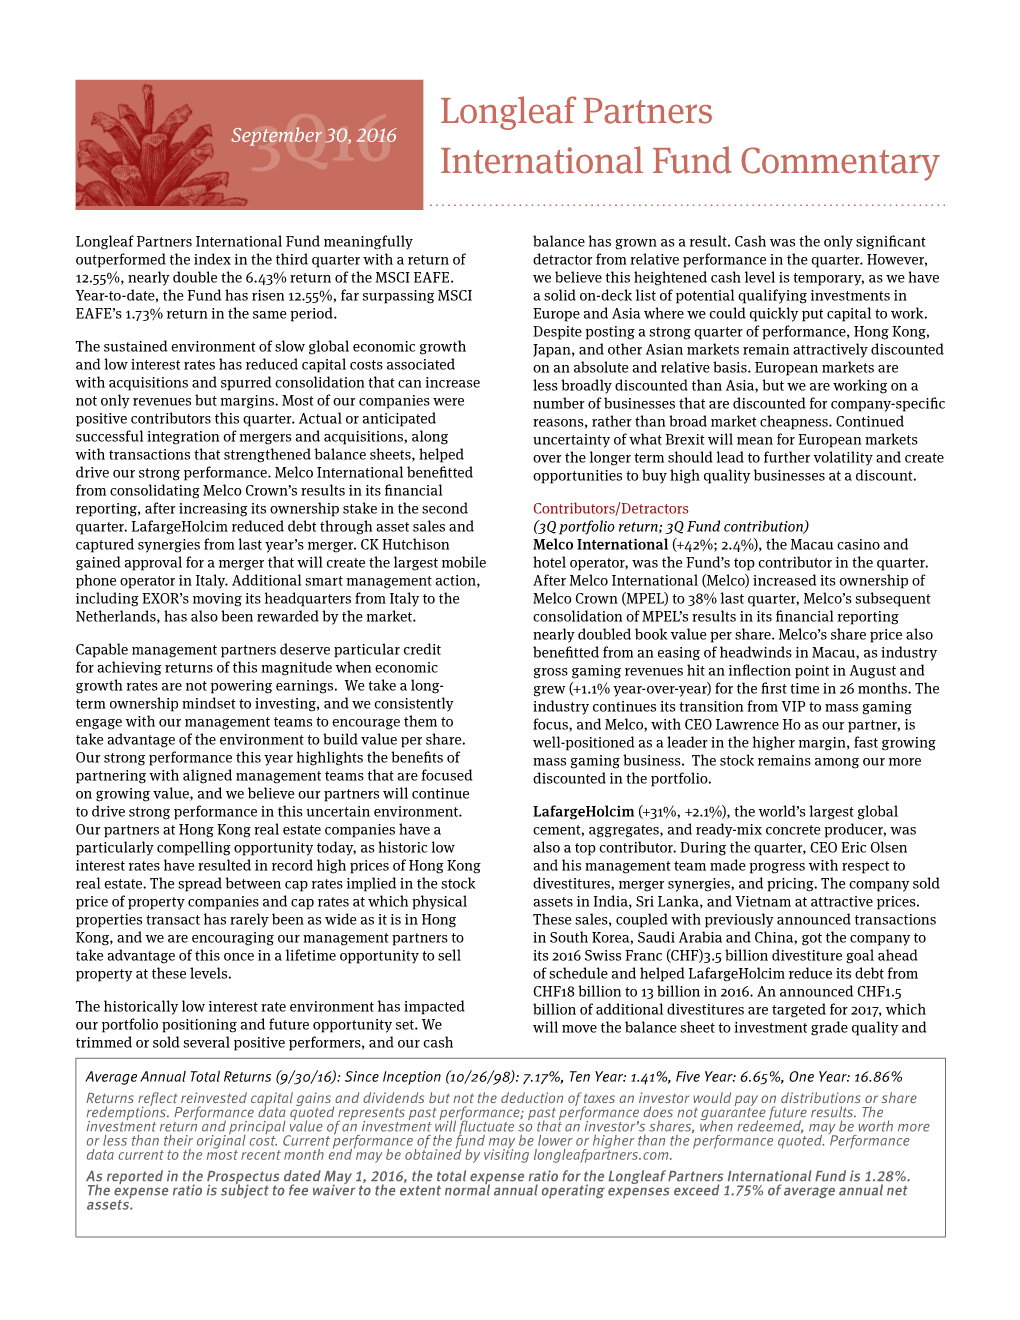 Longleaf Partners International Fund Commentary